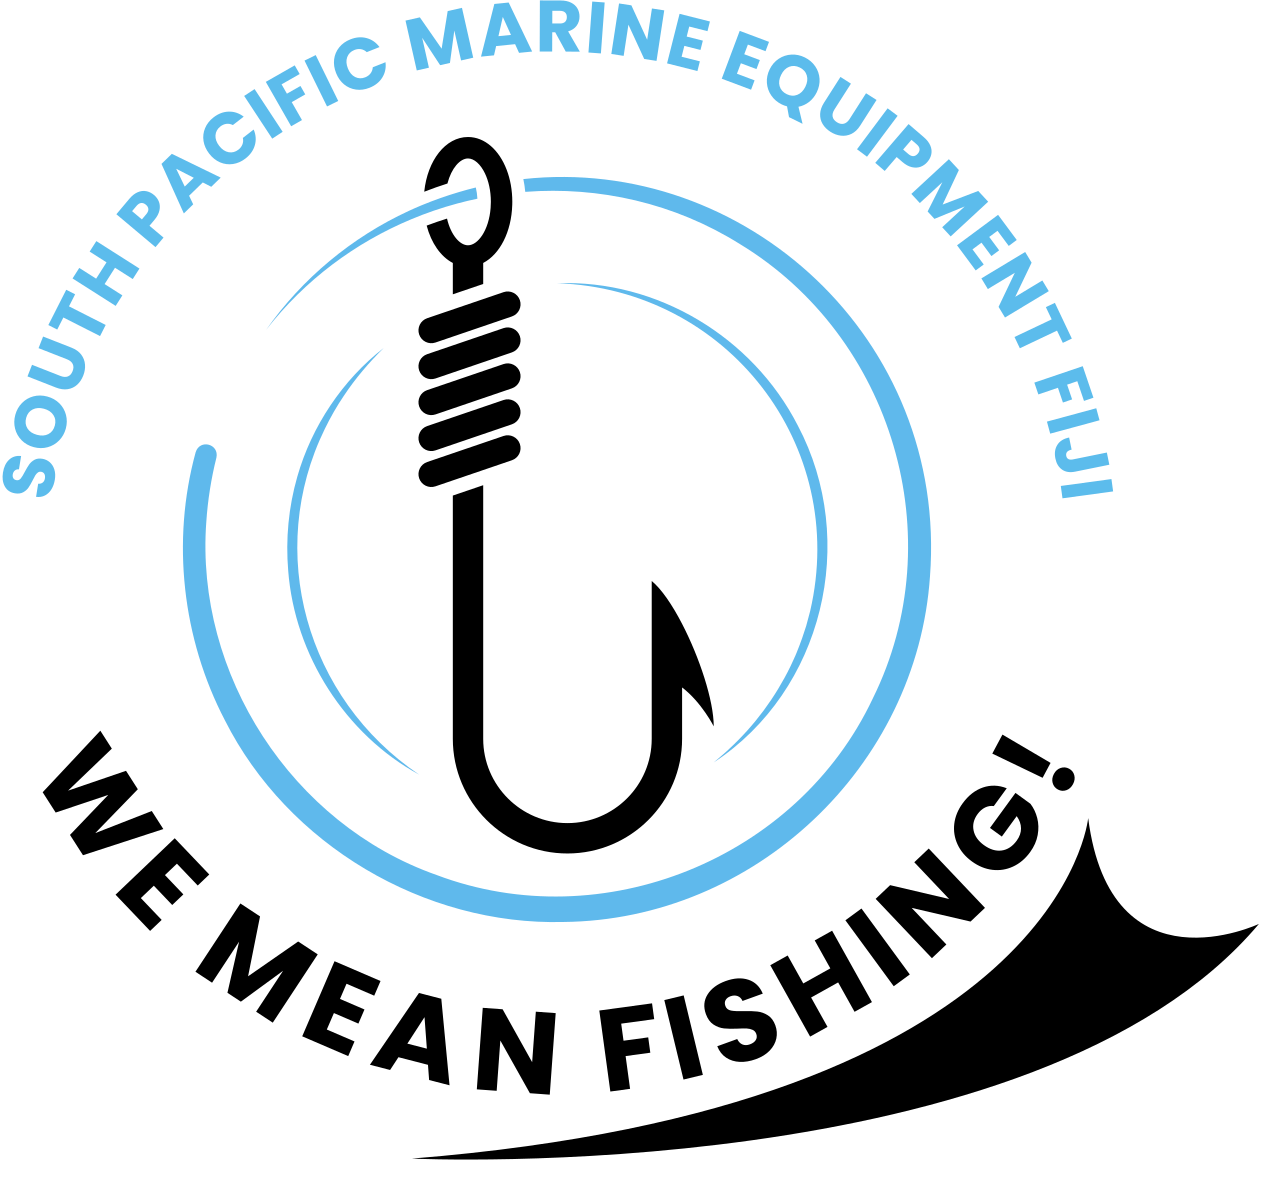 SOUTH PACIFIC MARINE EQUIPMENT FIJI's logo